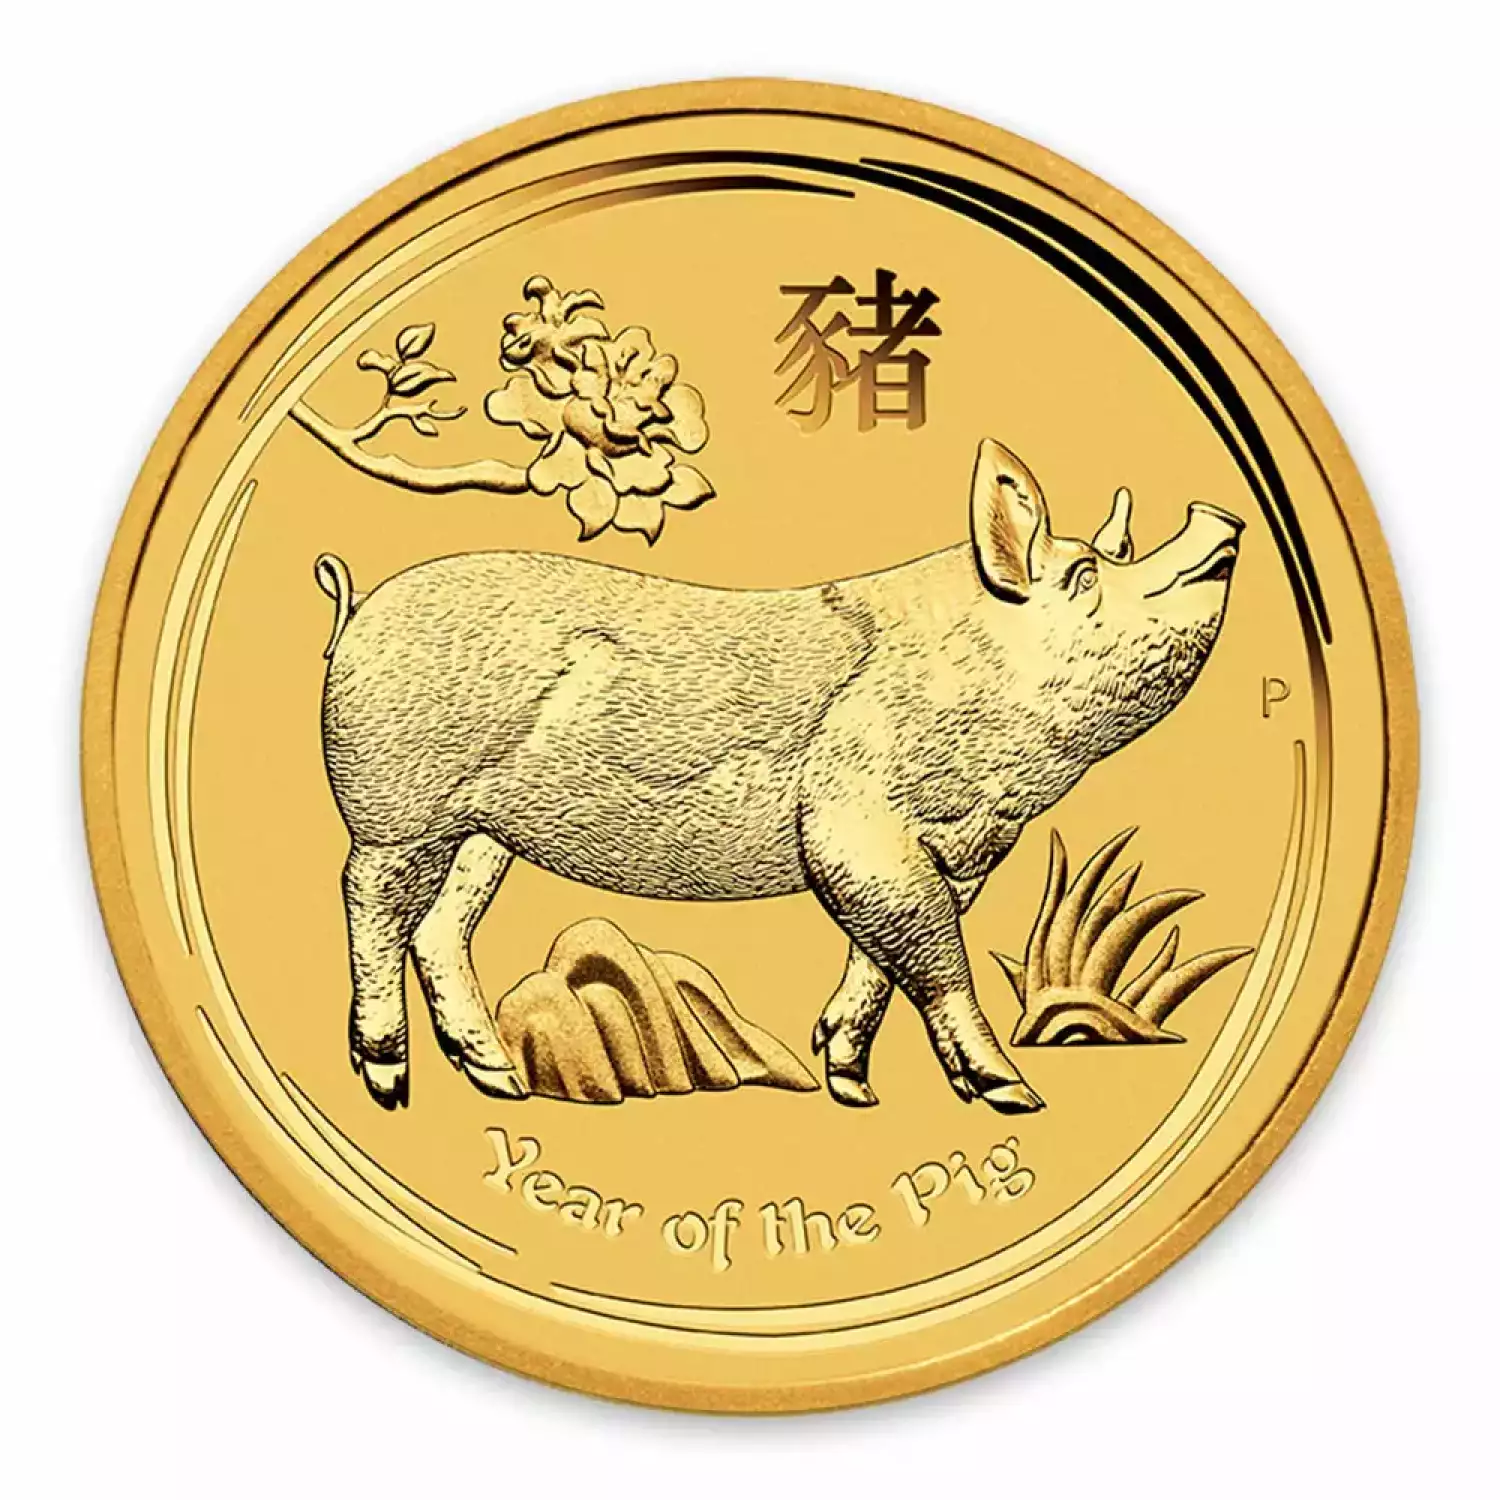 2019 1oz  Australian Perth Mint Gold Lunar Year of the Pig (2)